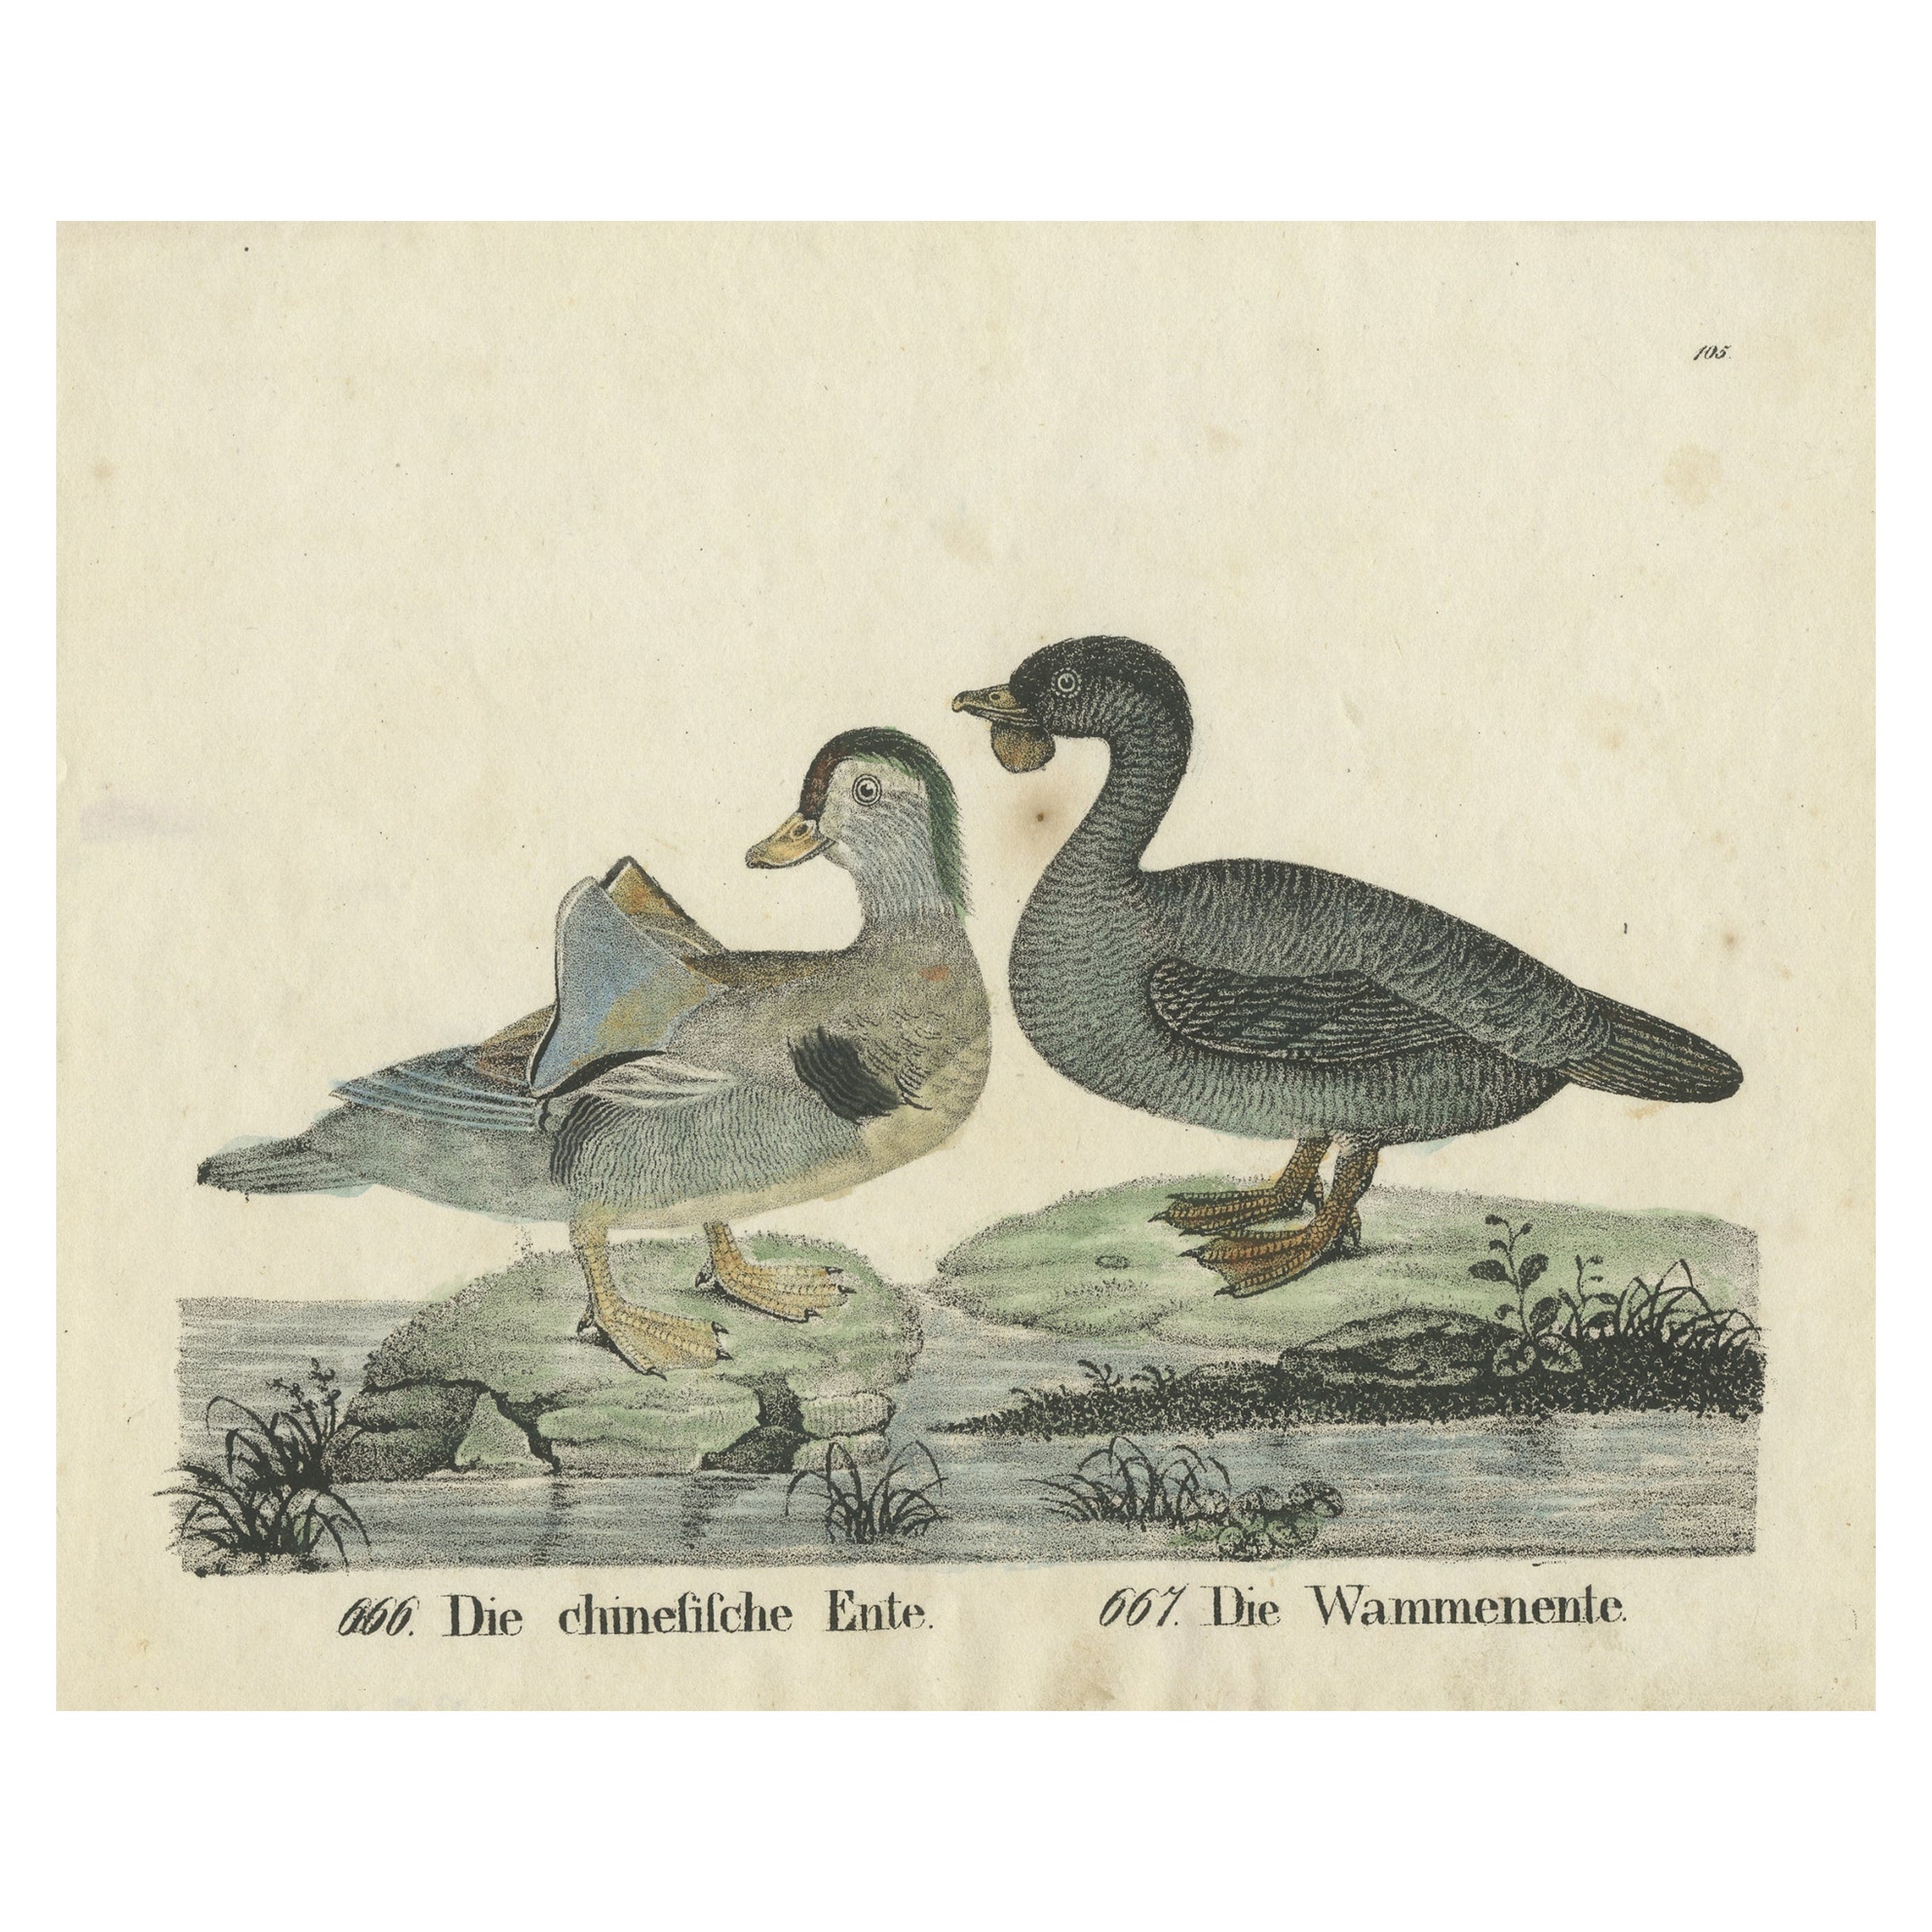 Original Antique Print of two Duck species